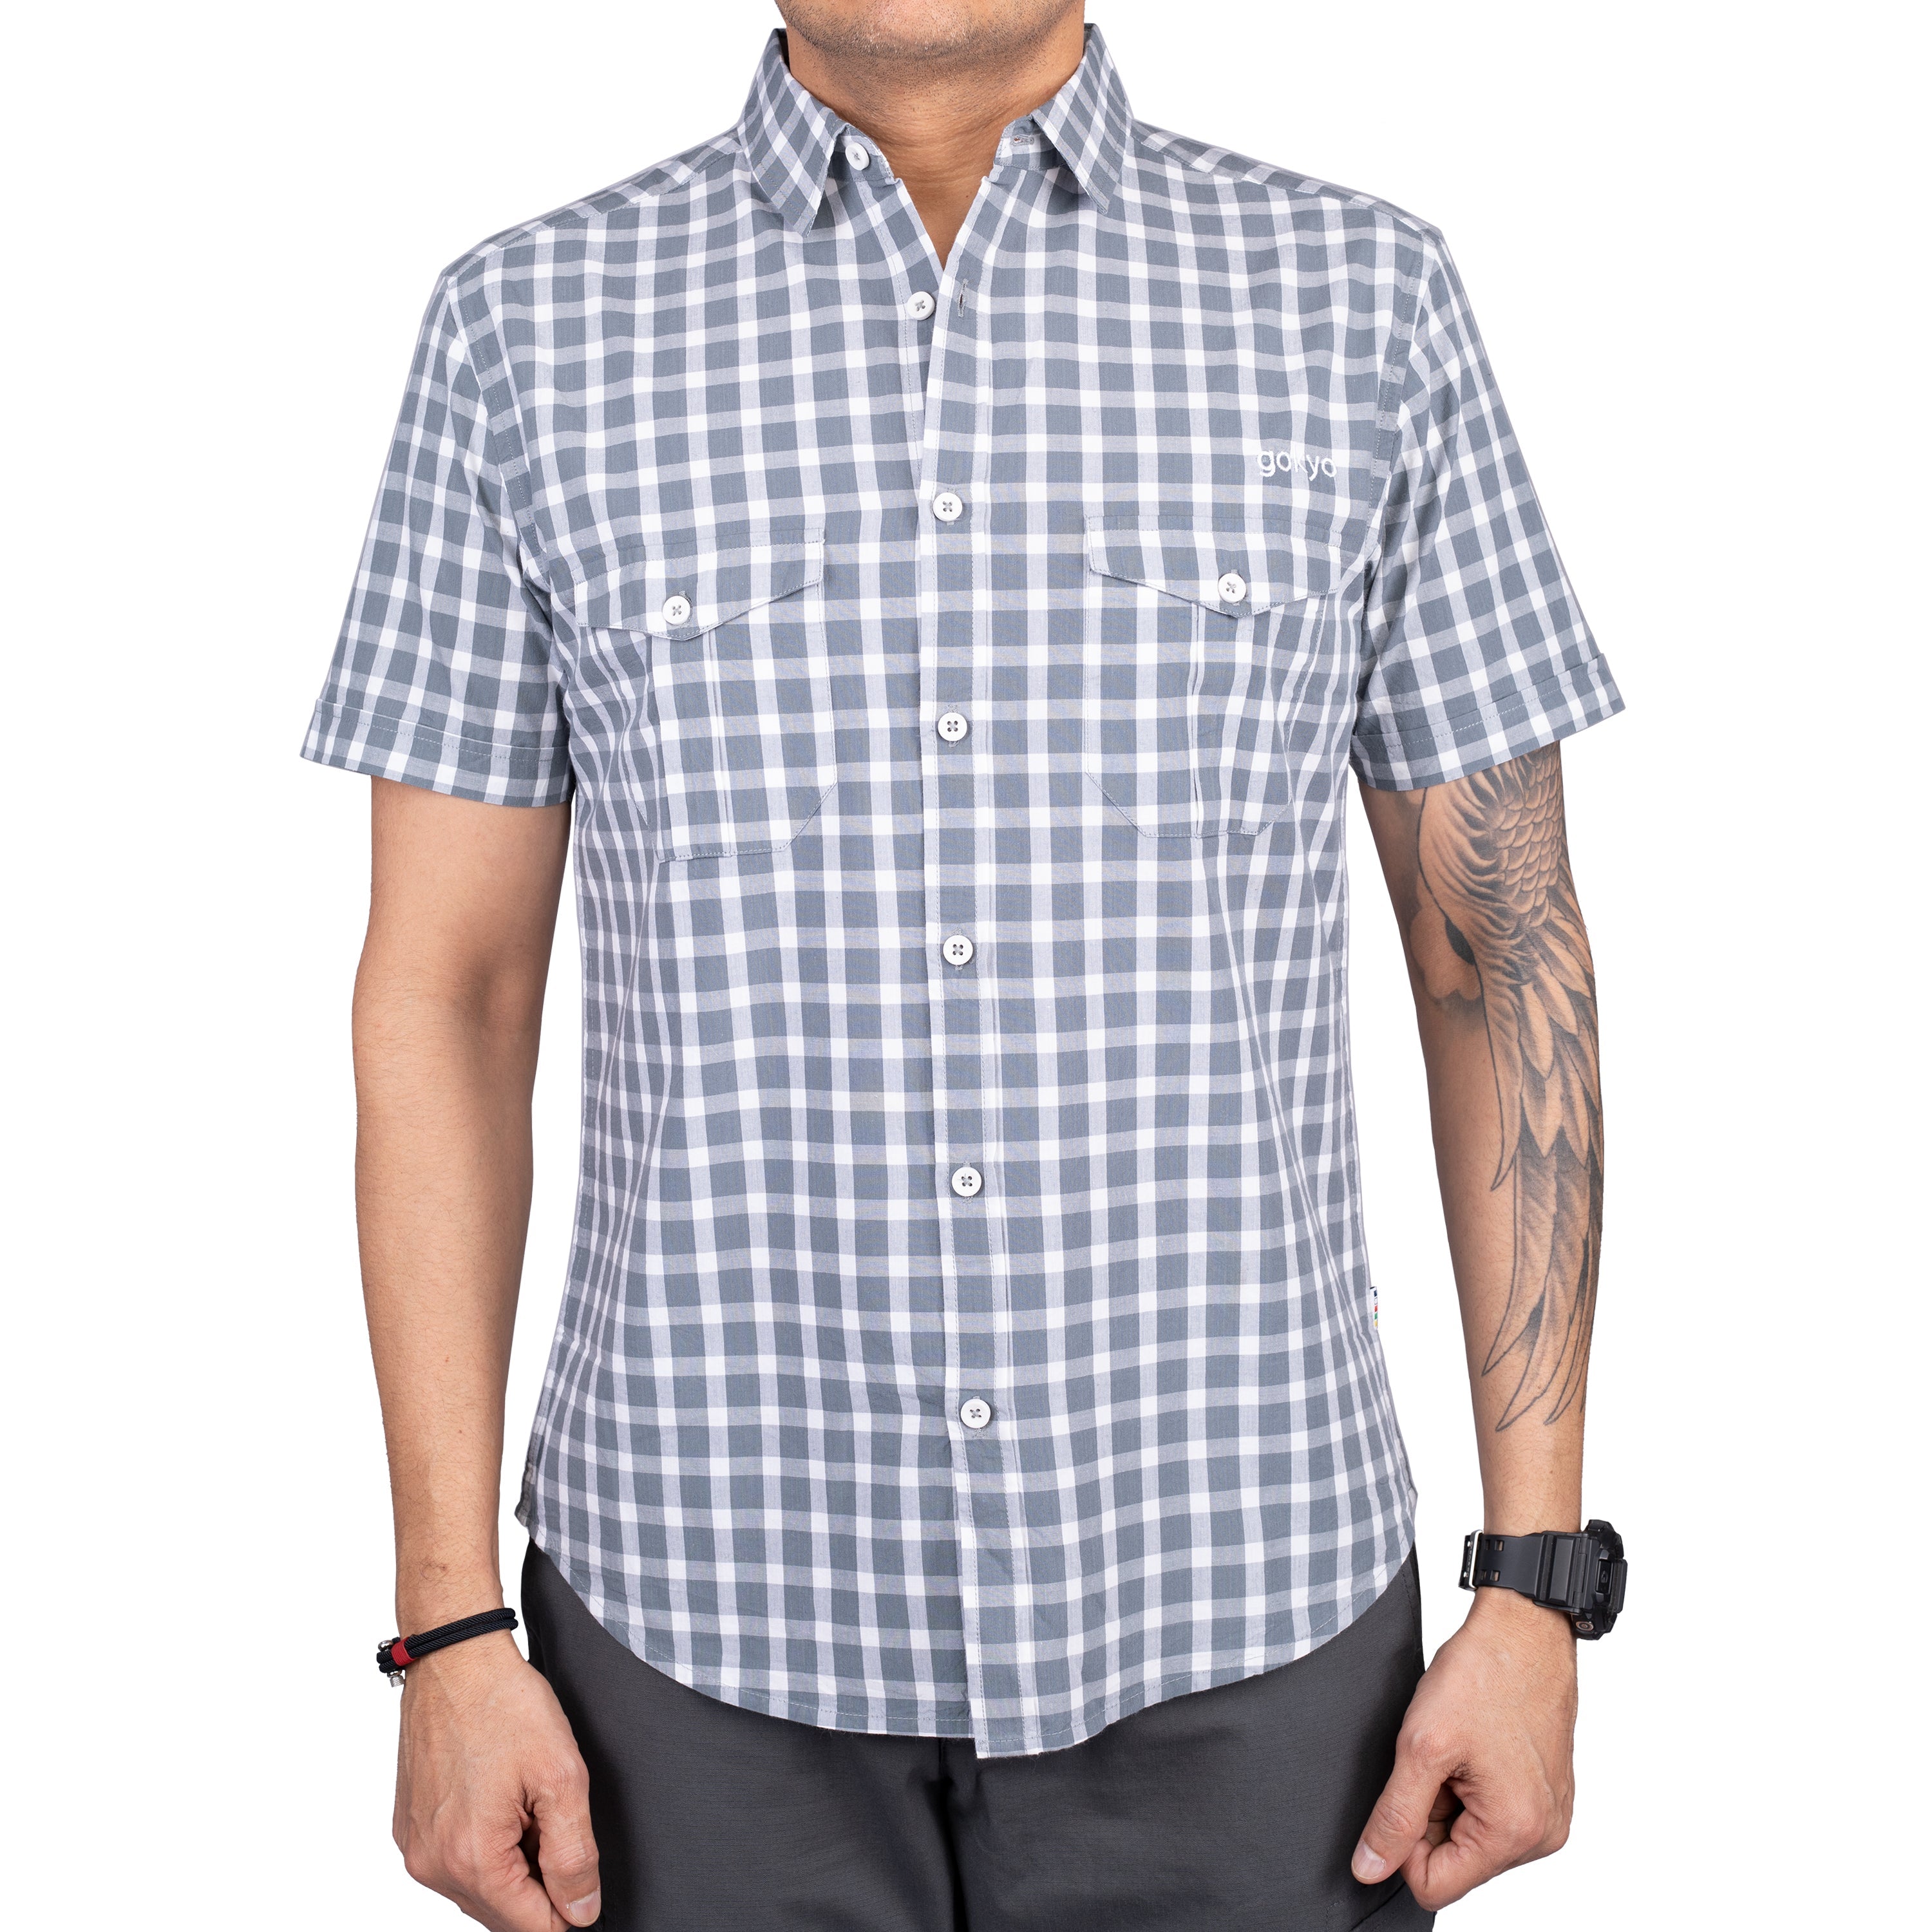 Buy Gokyo Corbett Cargo Half Sleeve Shirt Grey | Shirts at Gokyo Outdoor Clothing & Gear